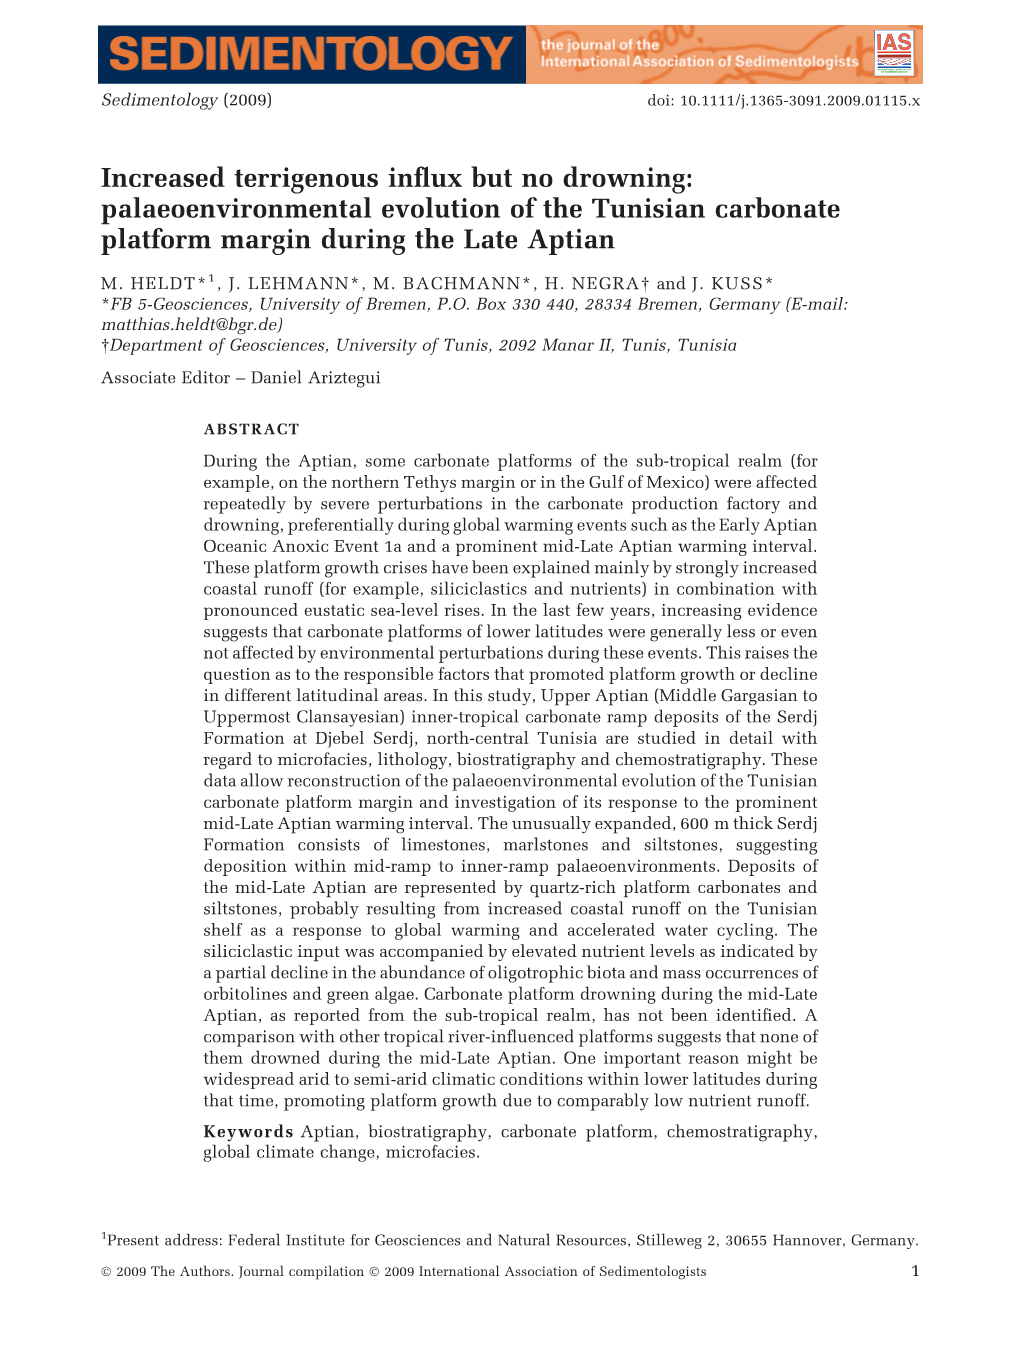 Palaeoenvironmental Evolution of the Tunisian Carbonate Platform Margin During the Late Aptian